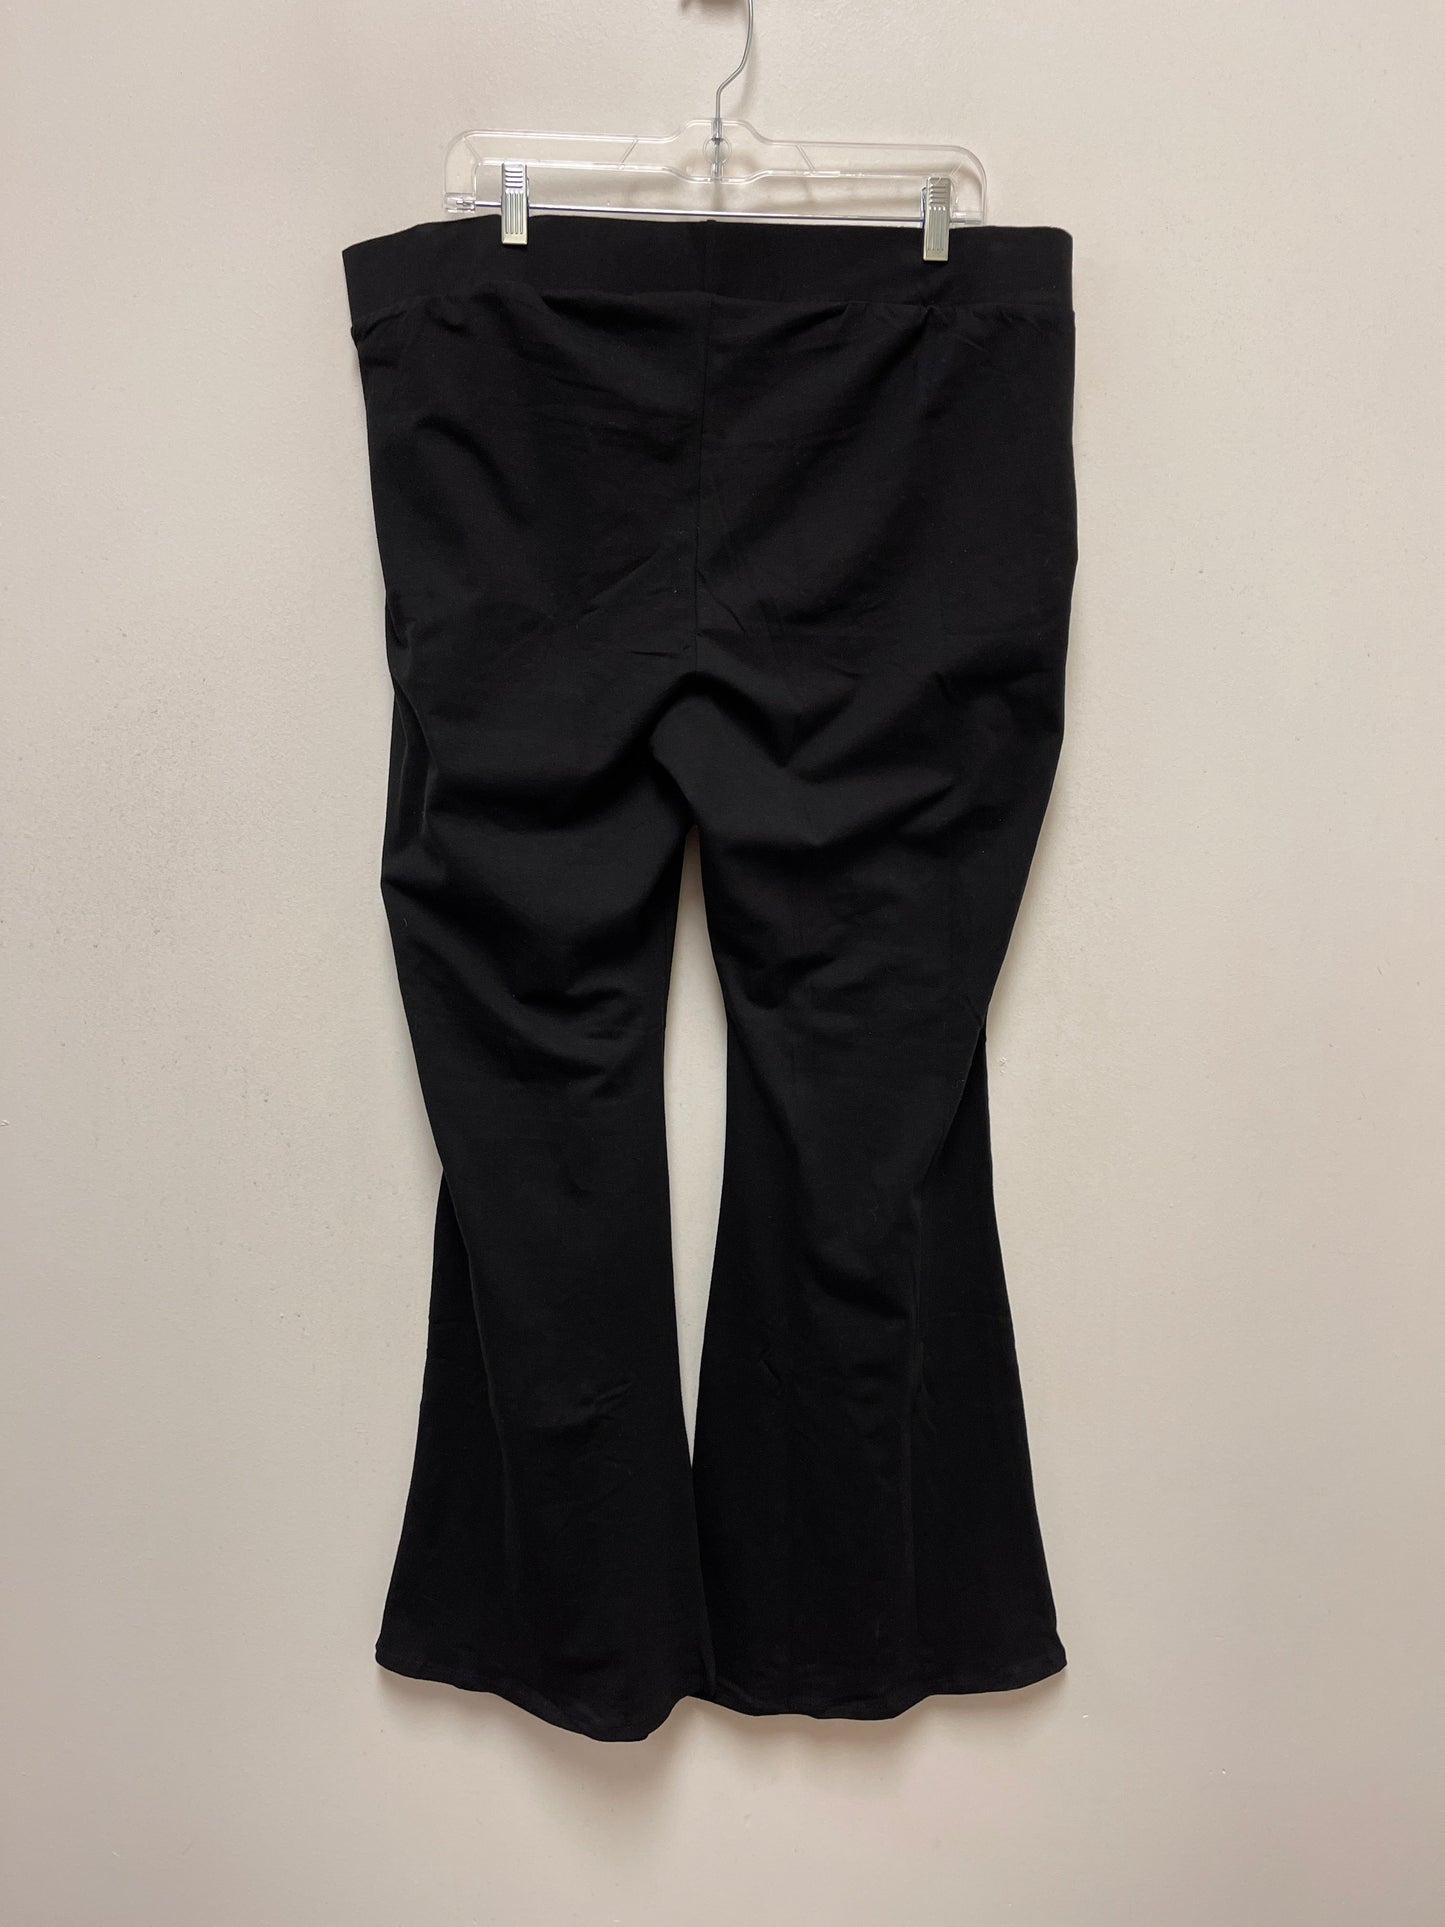 Black Athletic Pants Torrid, Size 3x